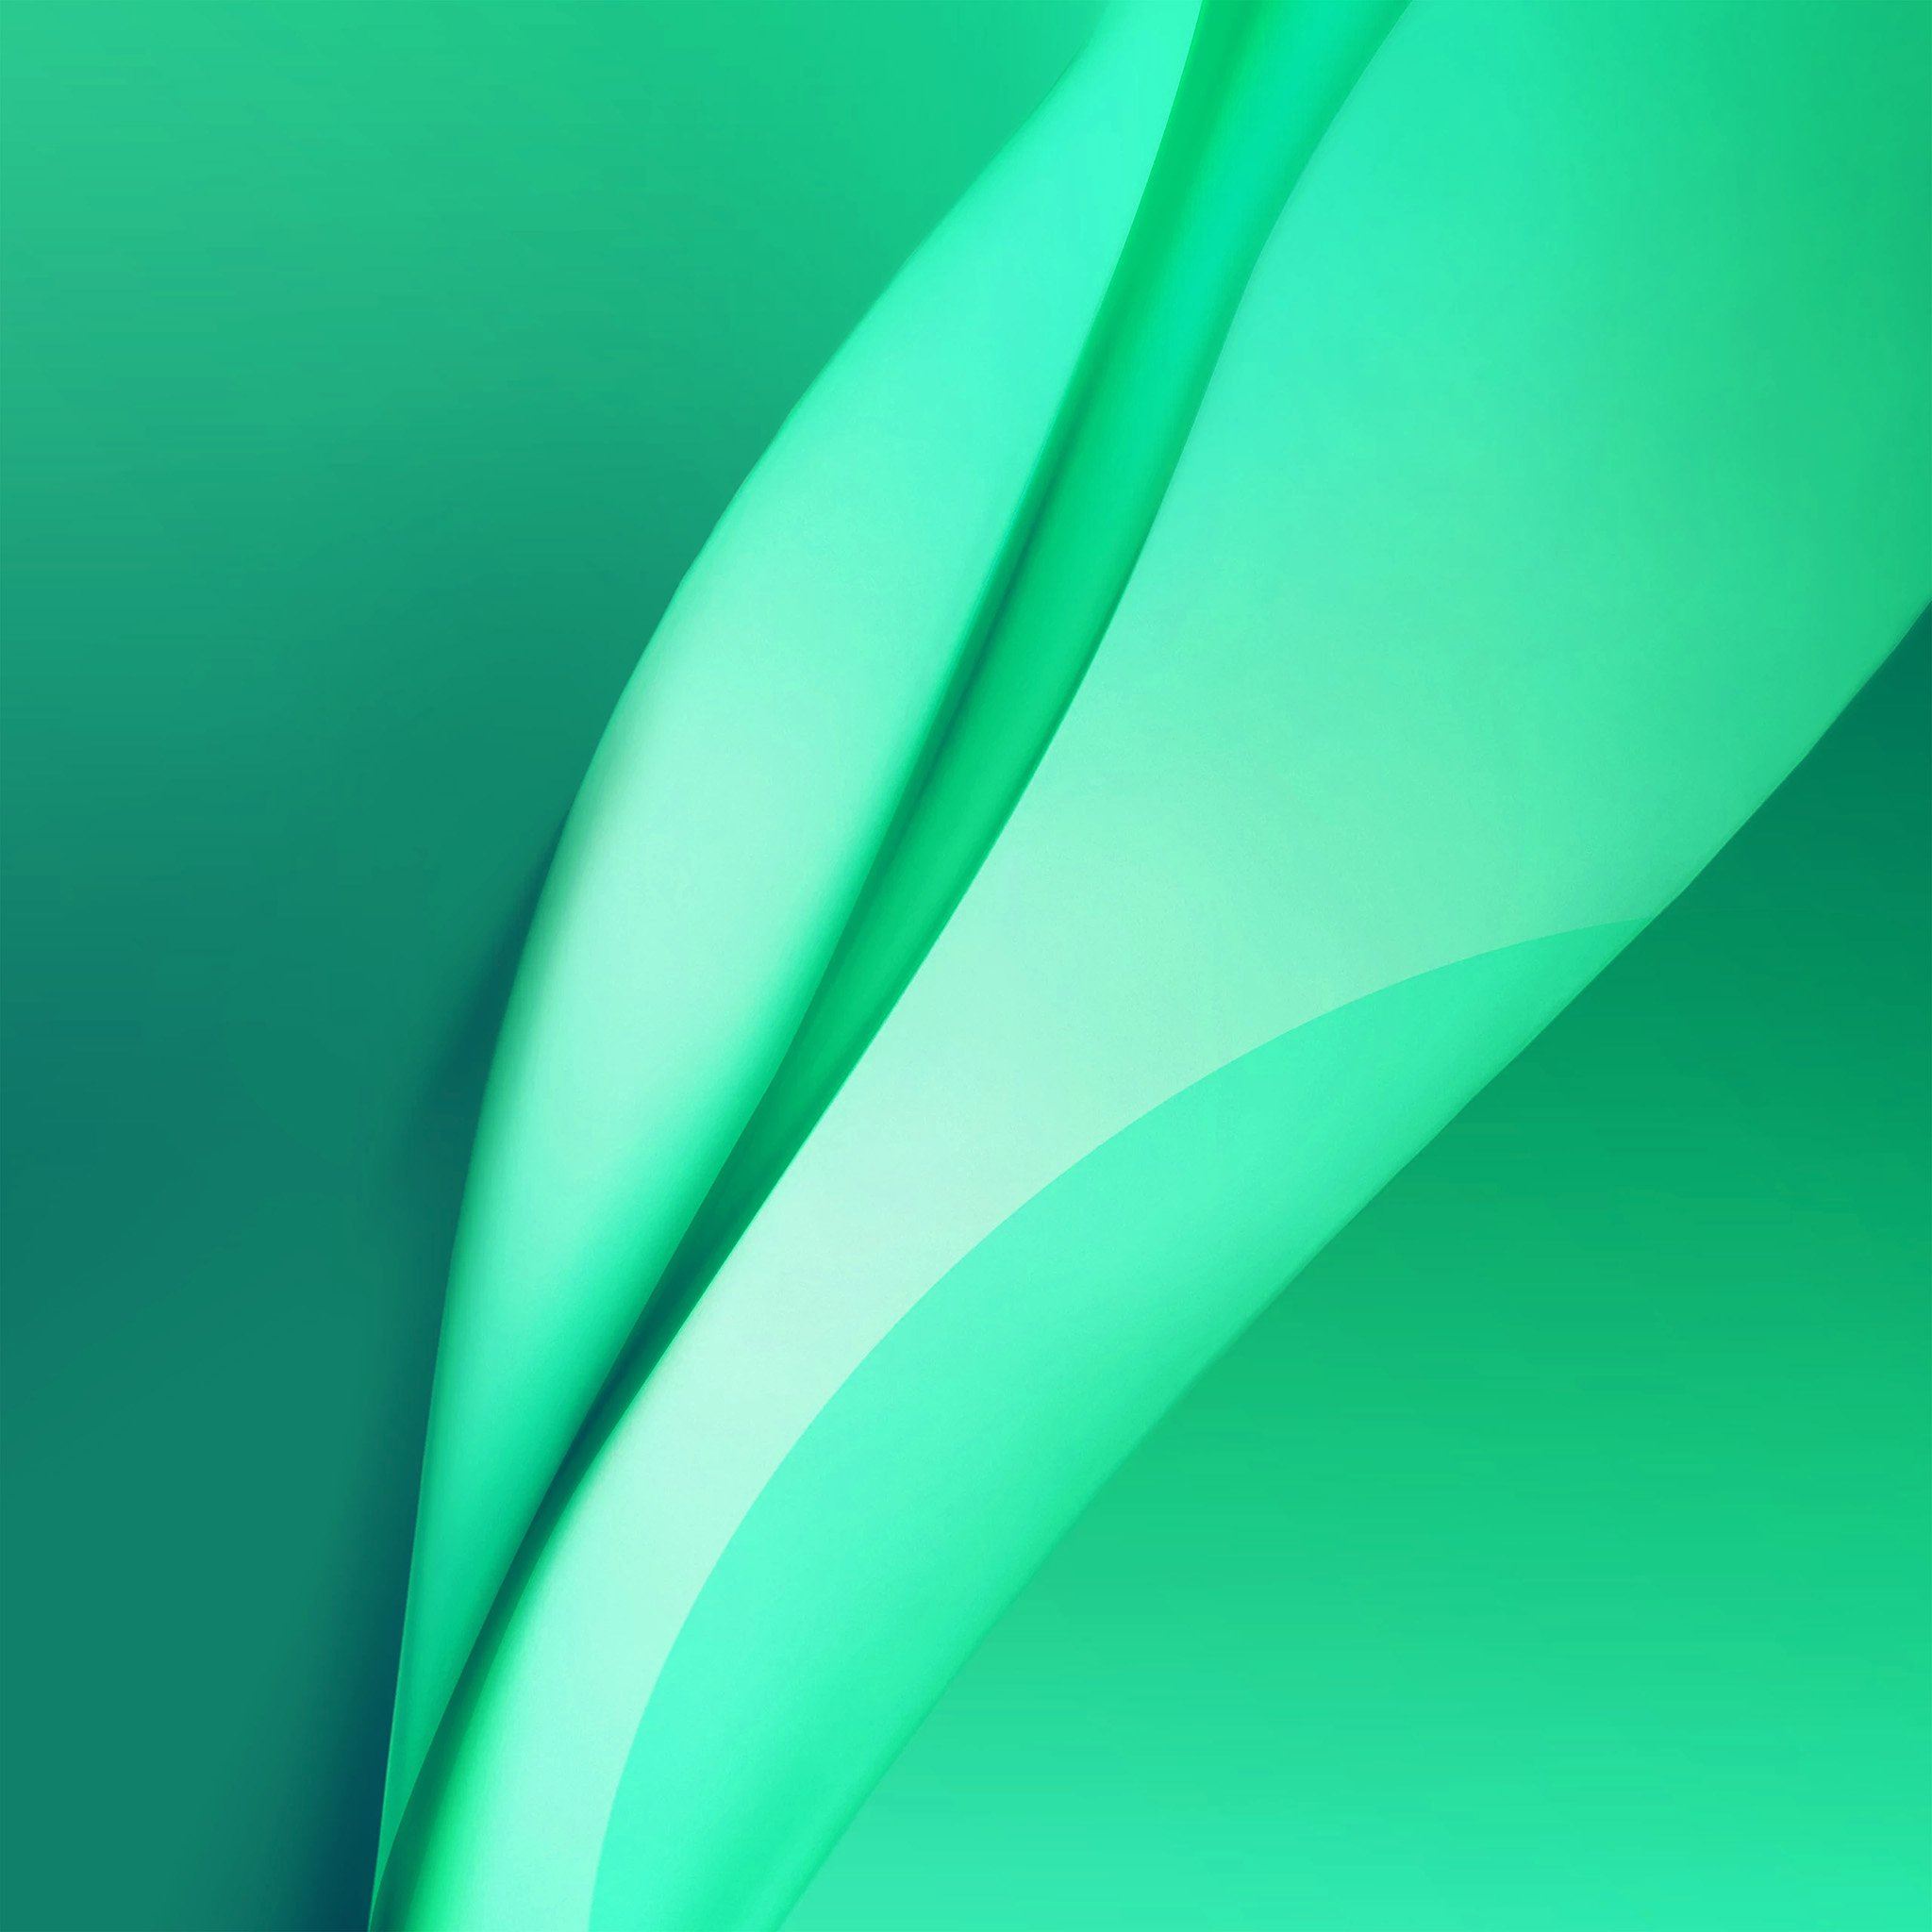 Line Art Abstract Green Pattern iPad Air wallpaper 